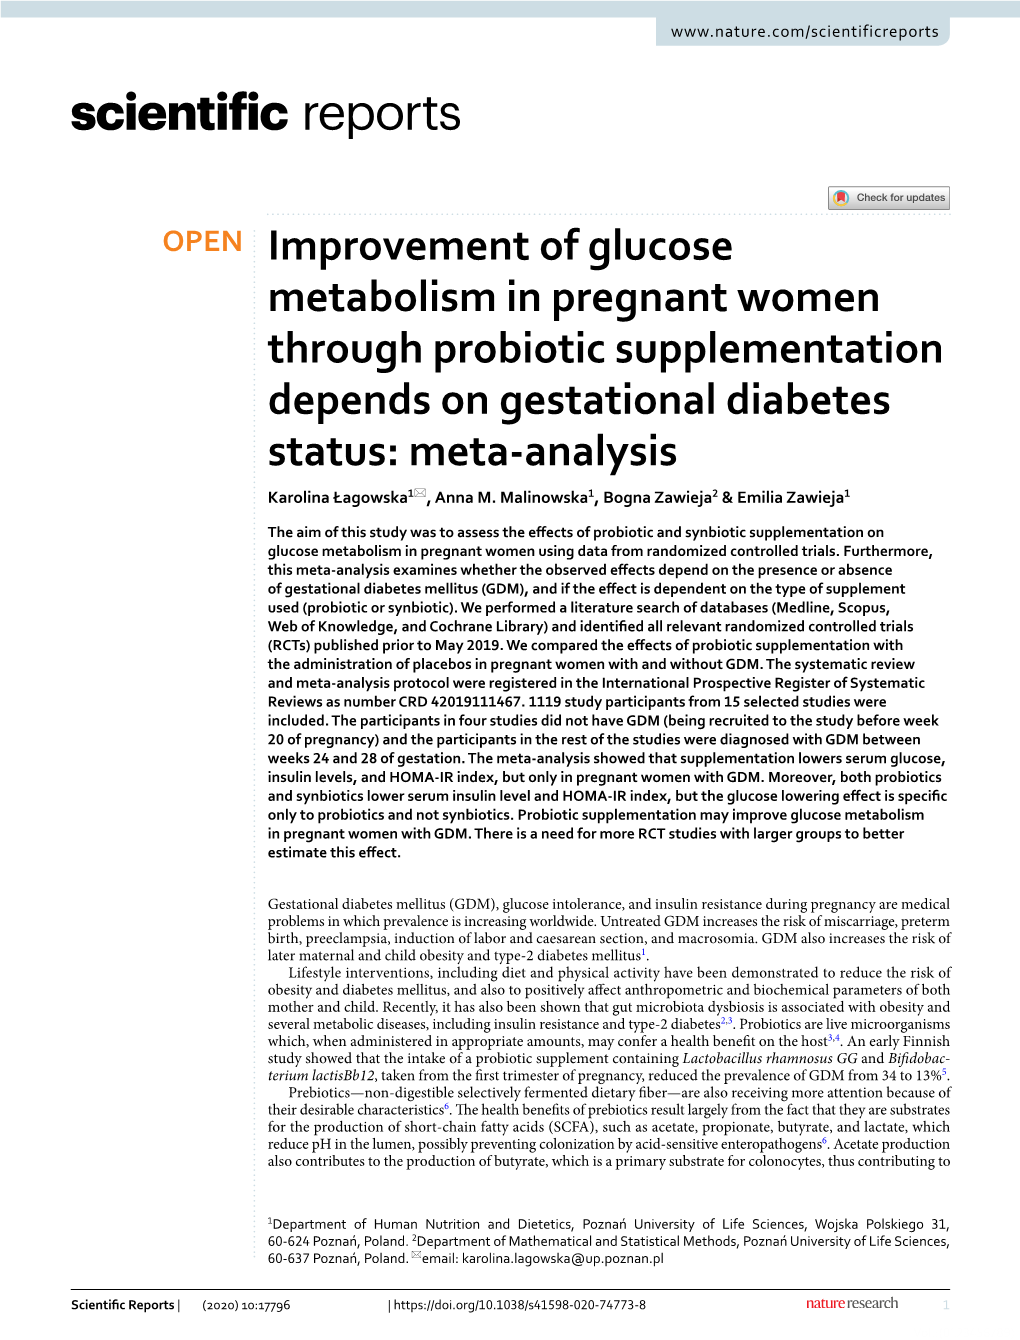 Improvement of Glucose Metabolism in Pregnant Women Through